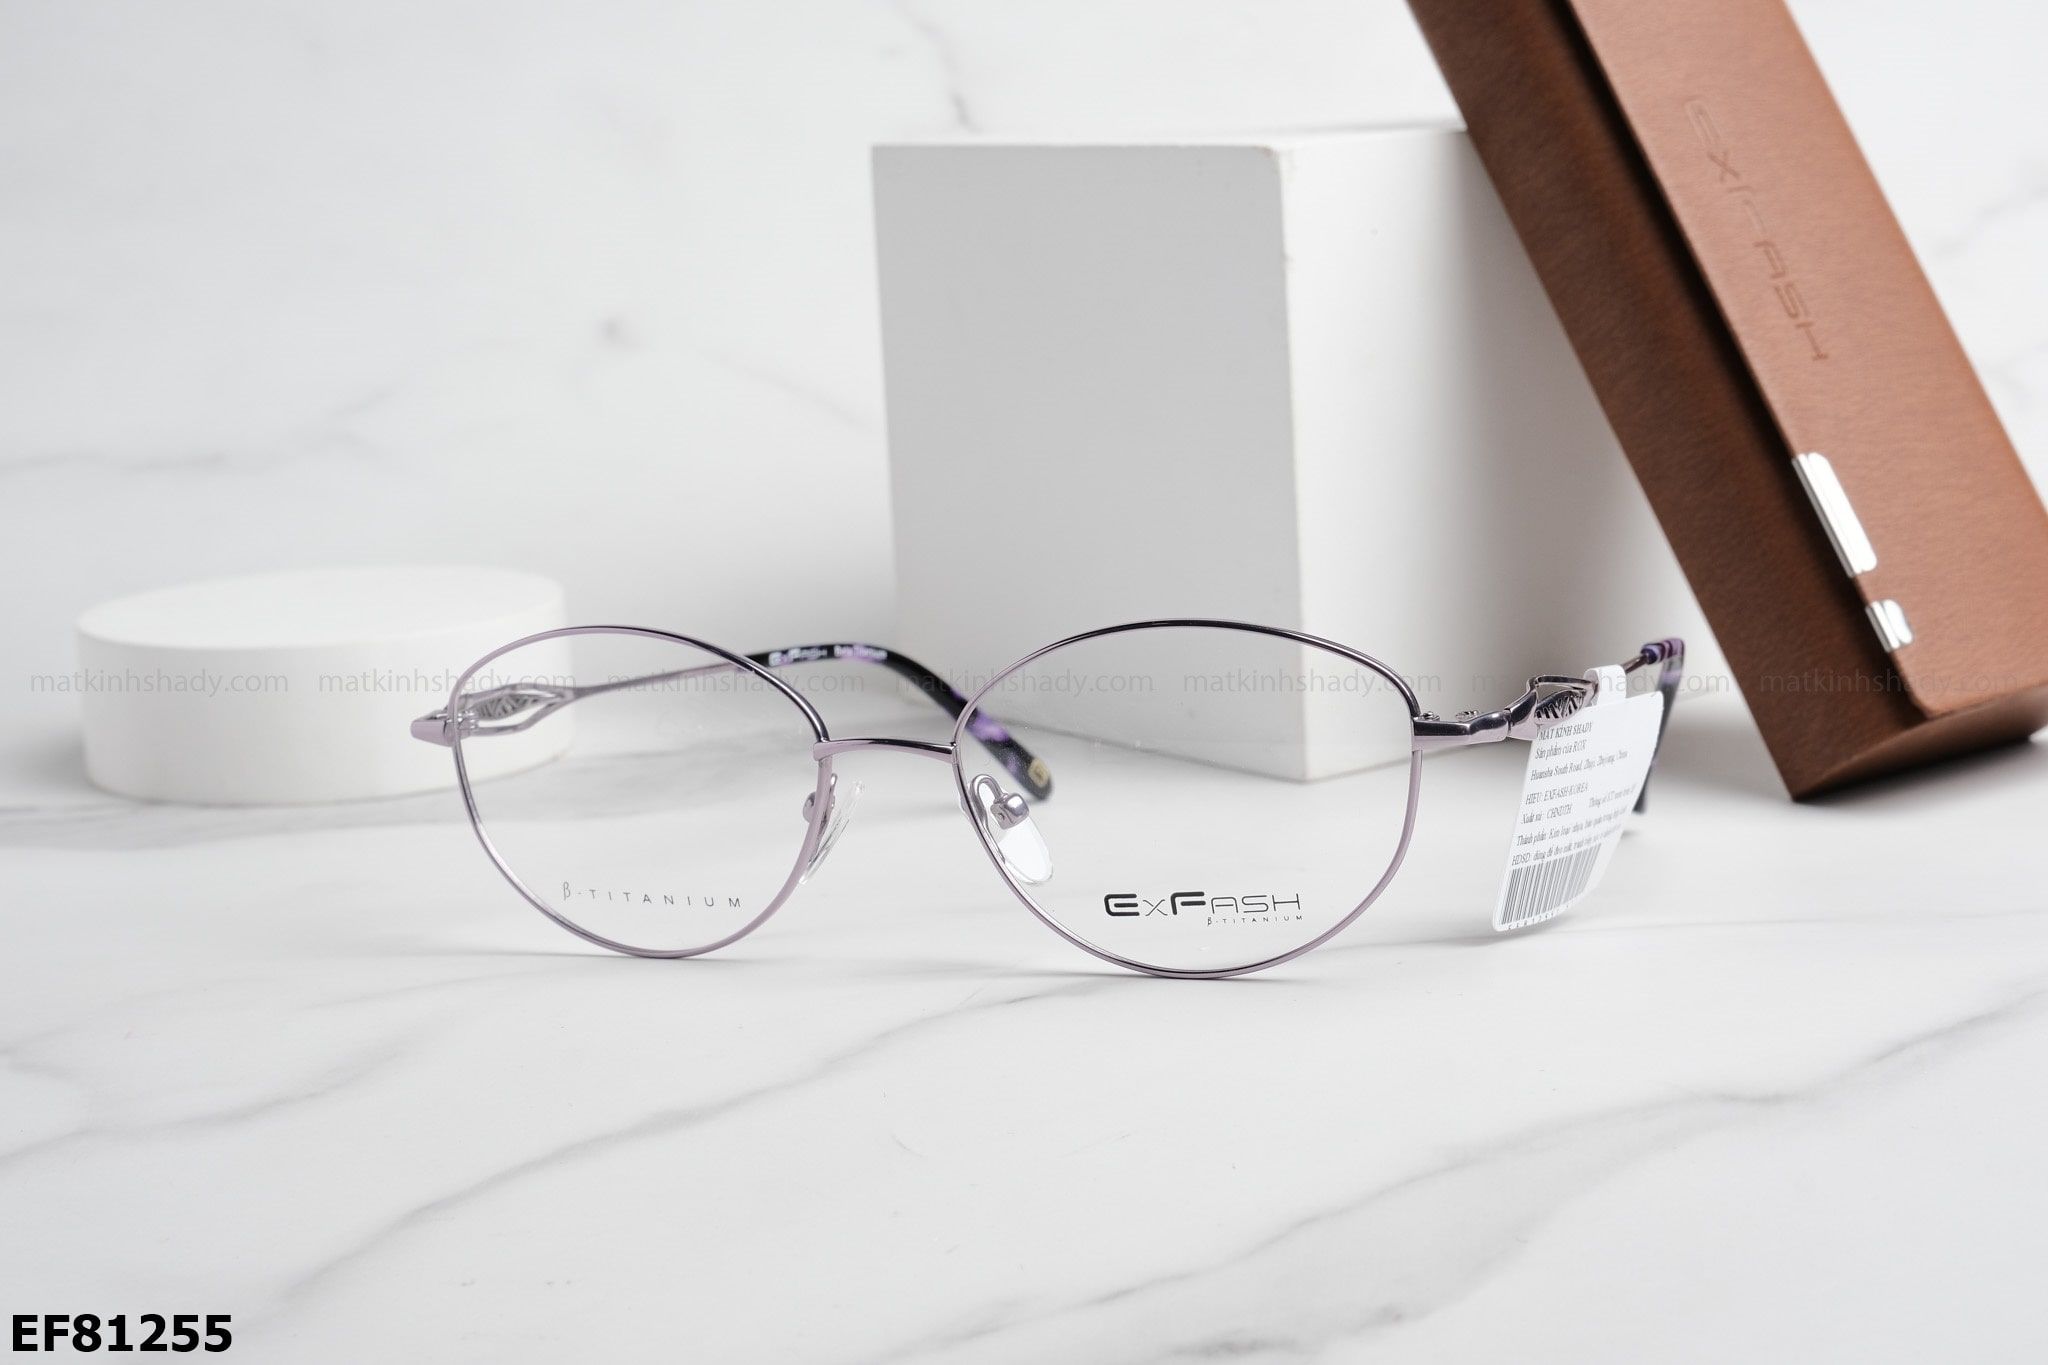  Exfash Eyewear - Glasses - EF81255 